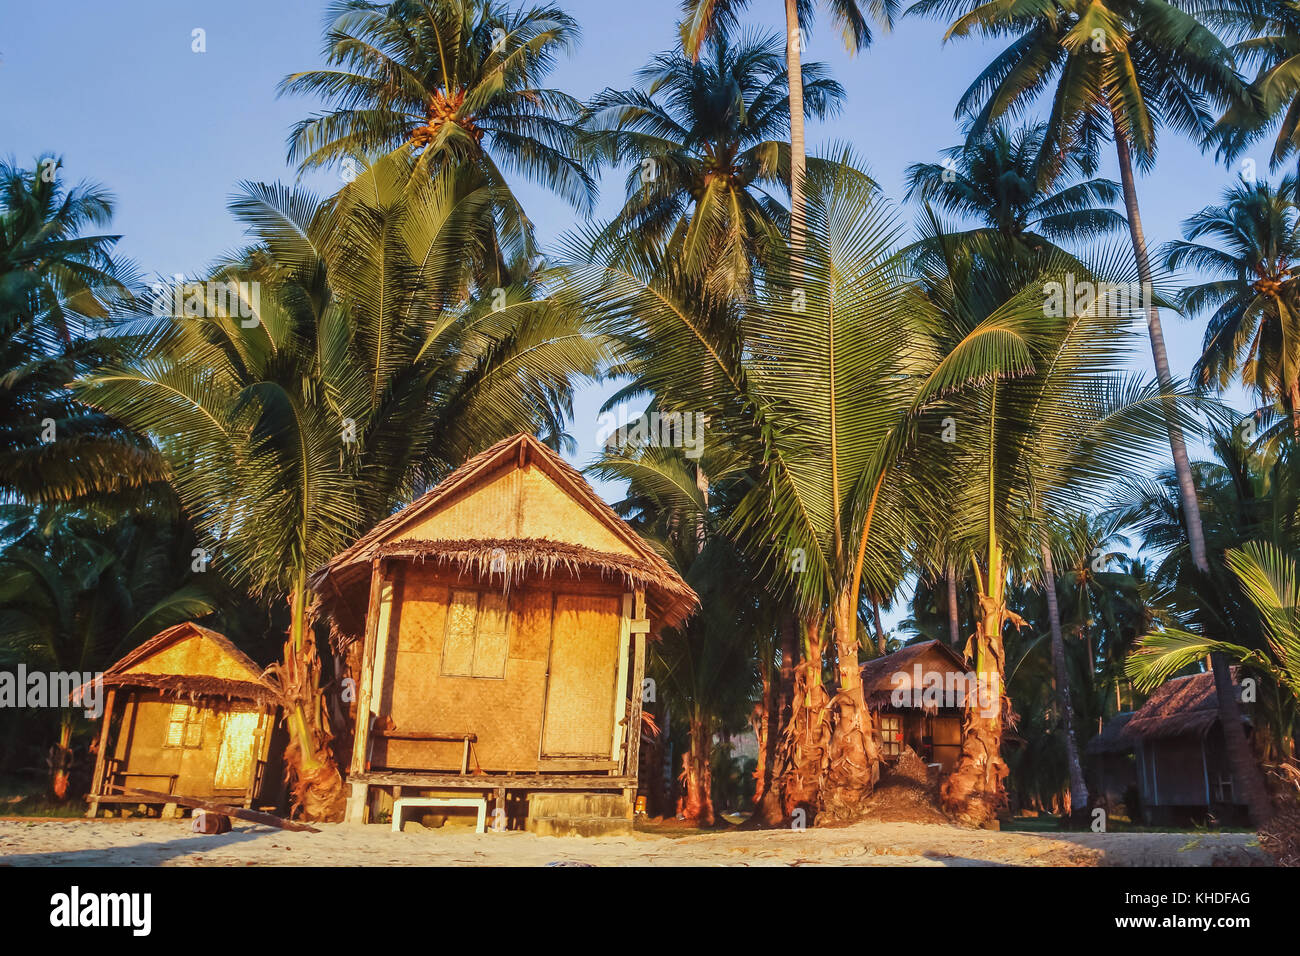 cheap budget accommodation on the beach, bamboo huts hotel Stock Photo